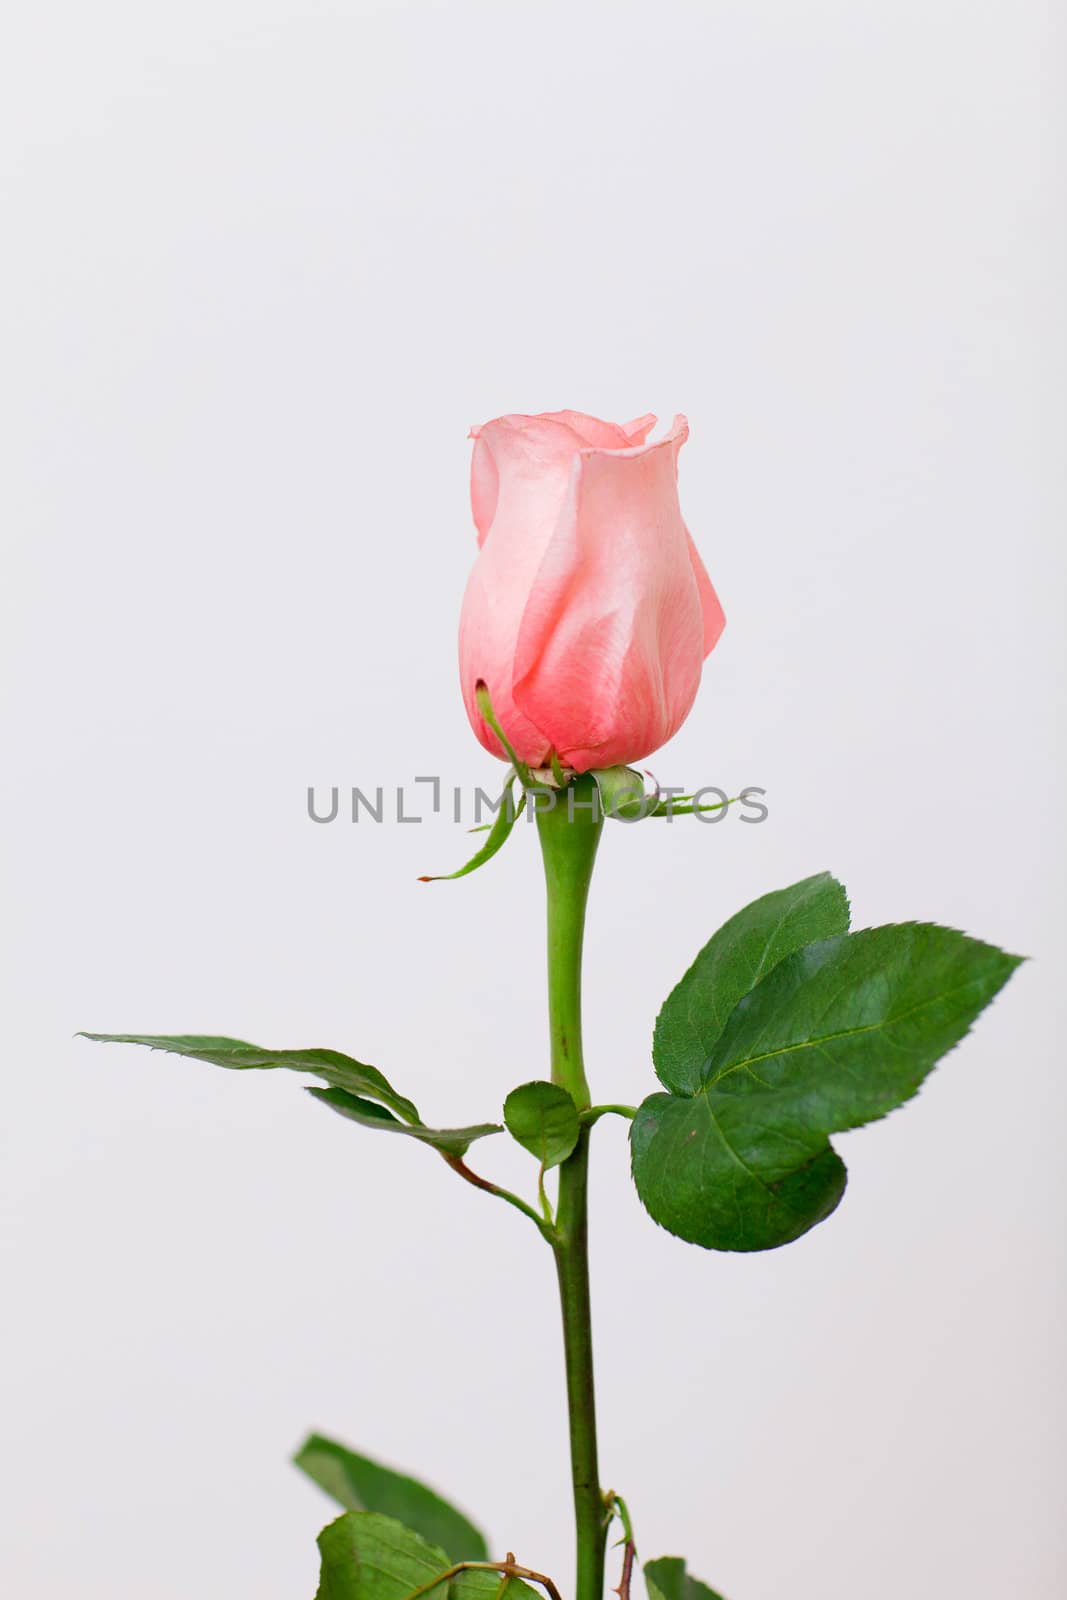 a beautiful rose by vsurkov